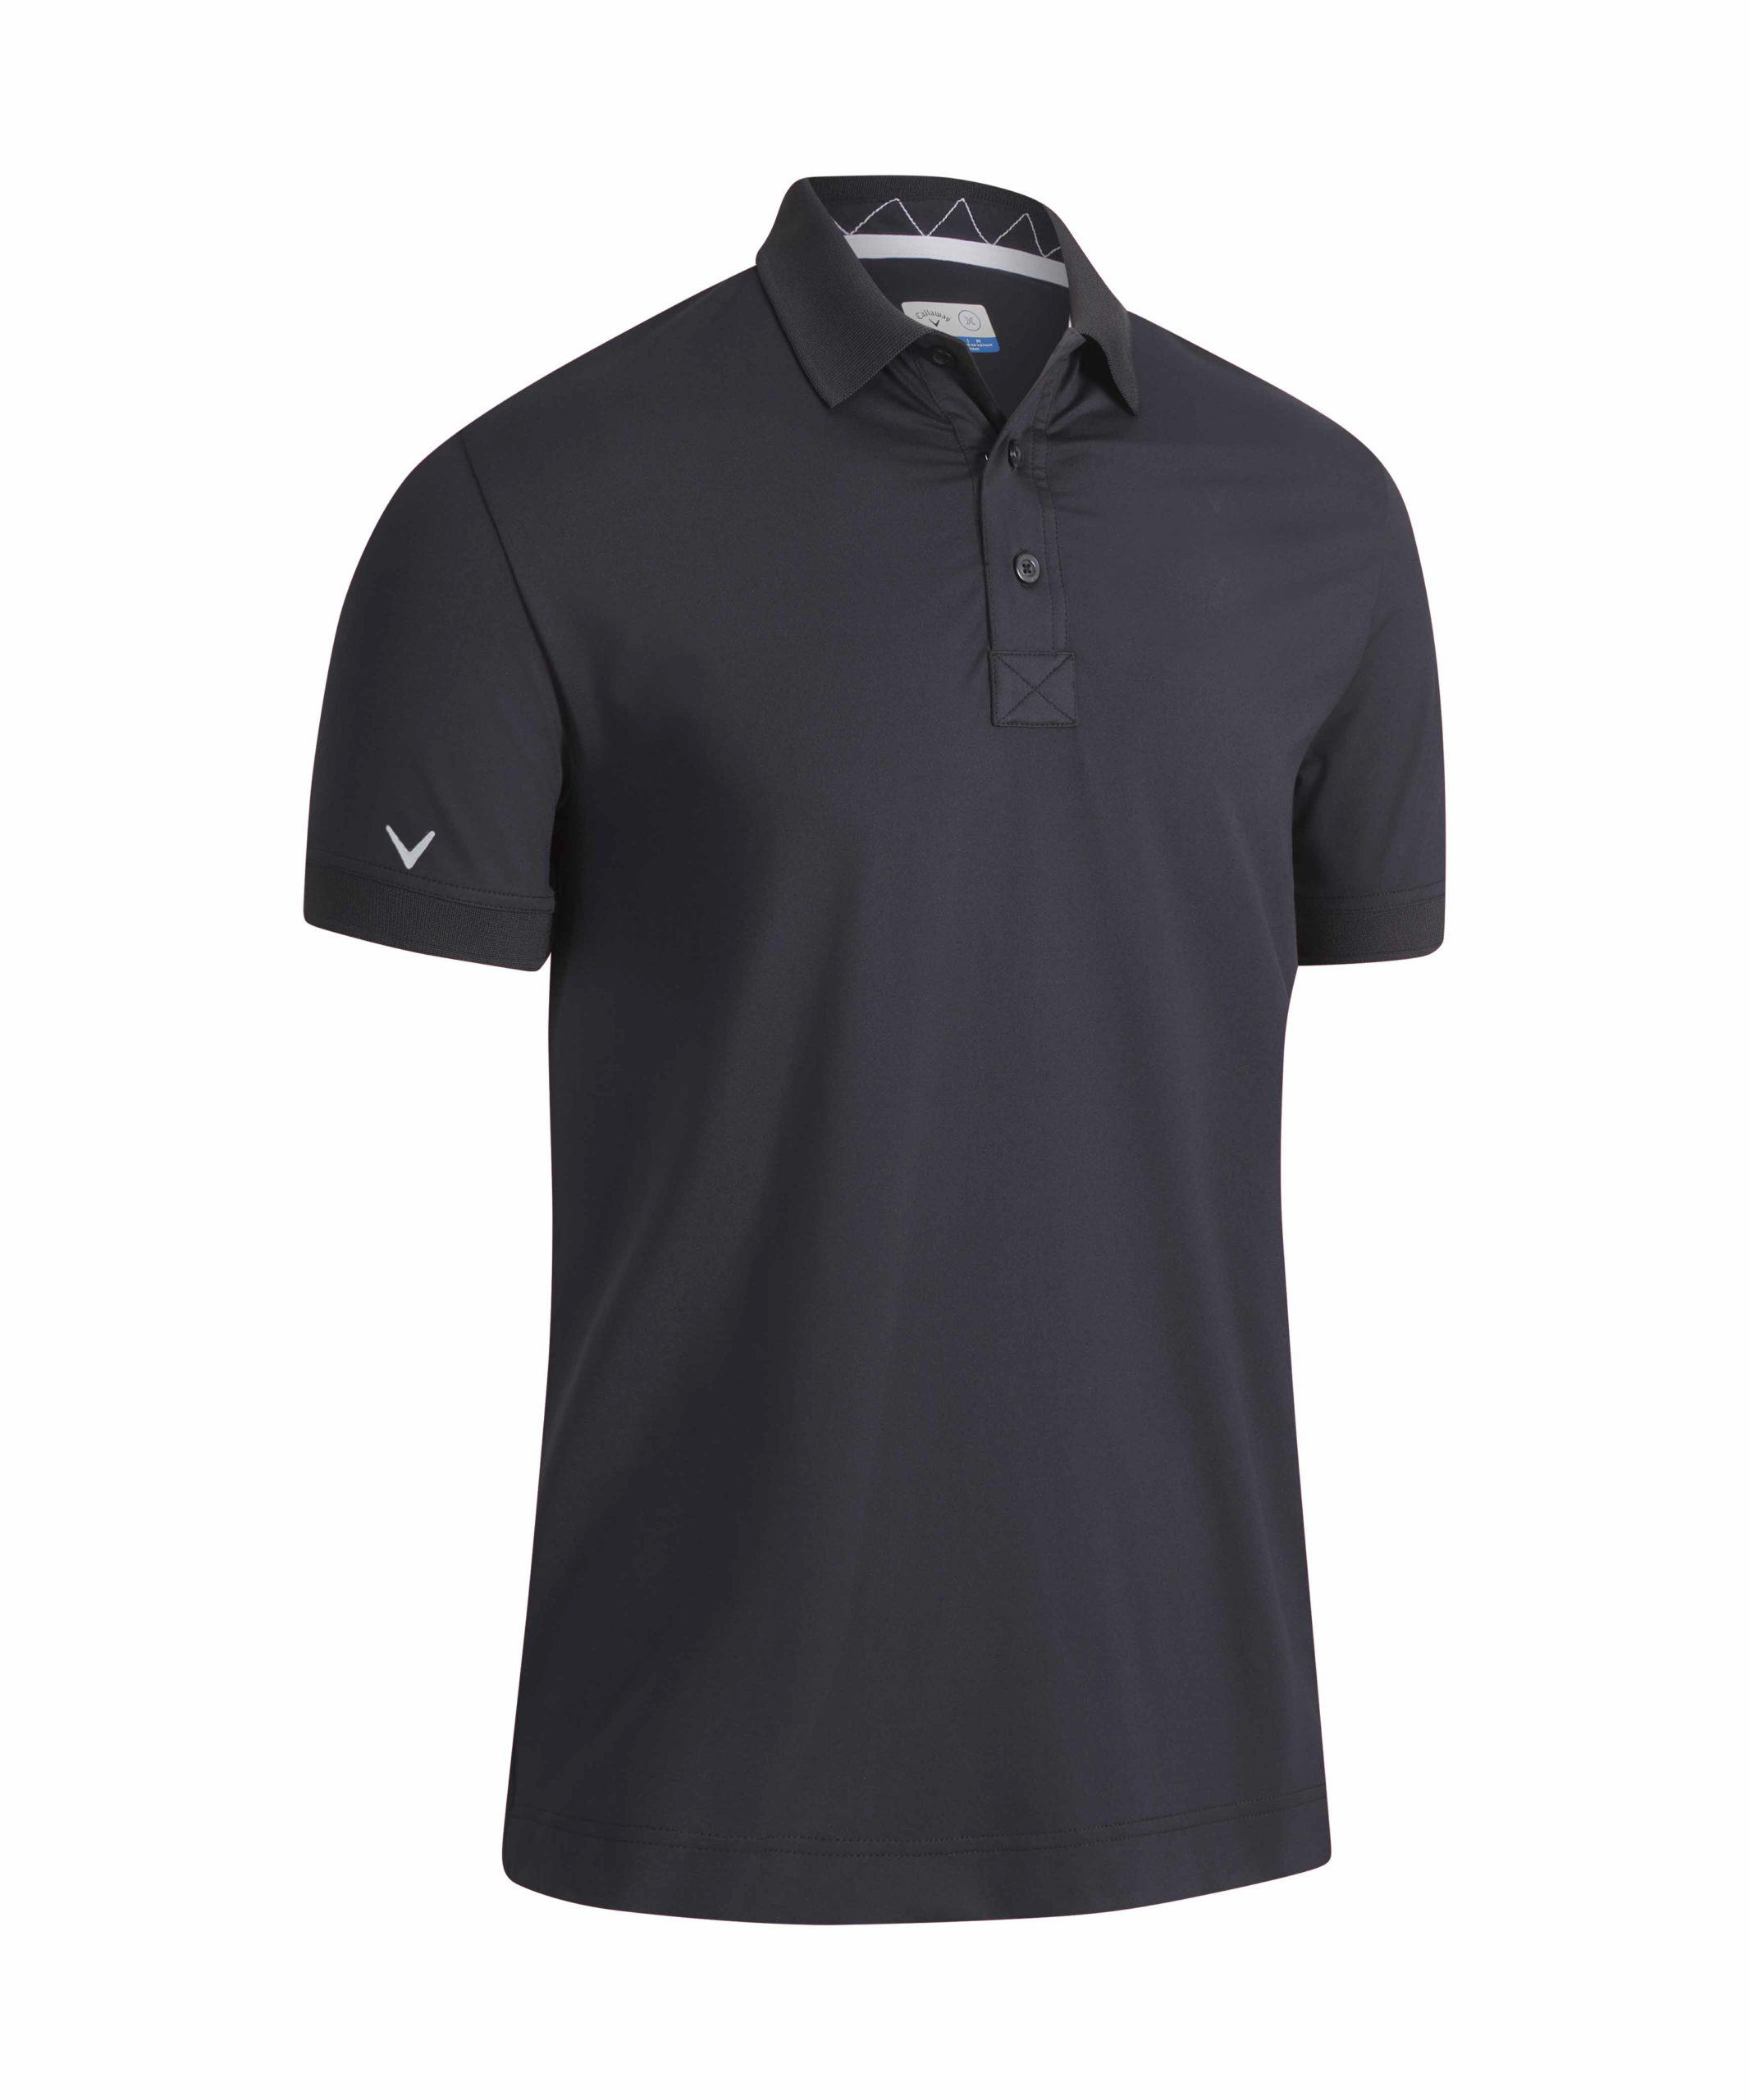 Callaway Solid Ribbed pánské golfové triko, černé, vel. L